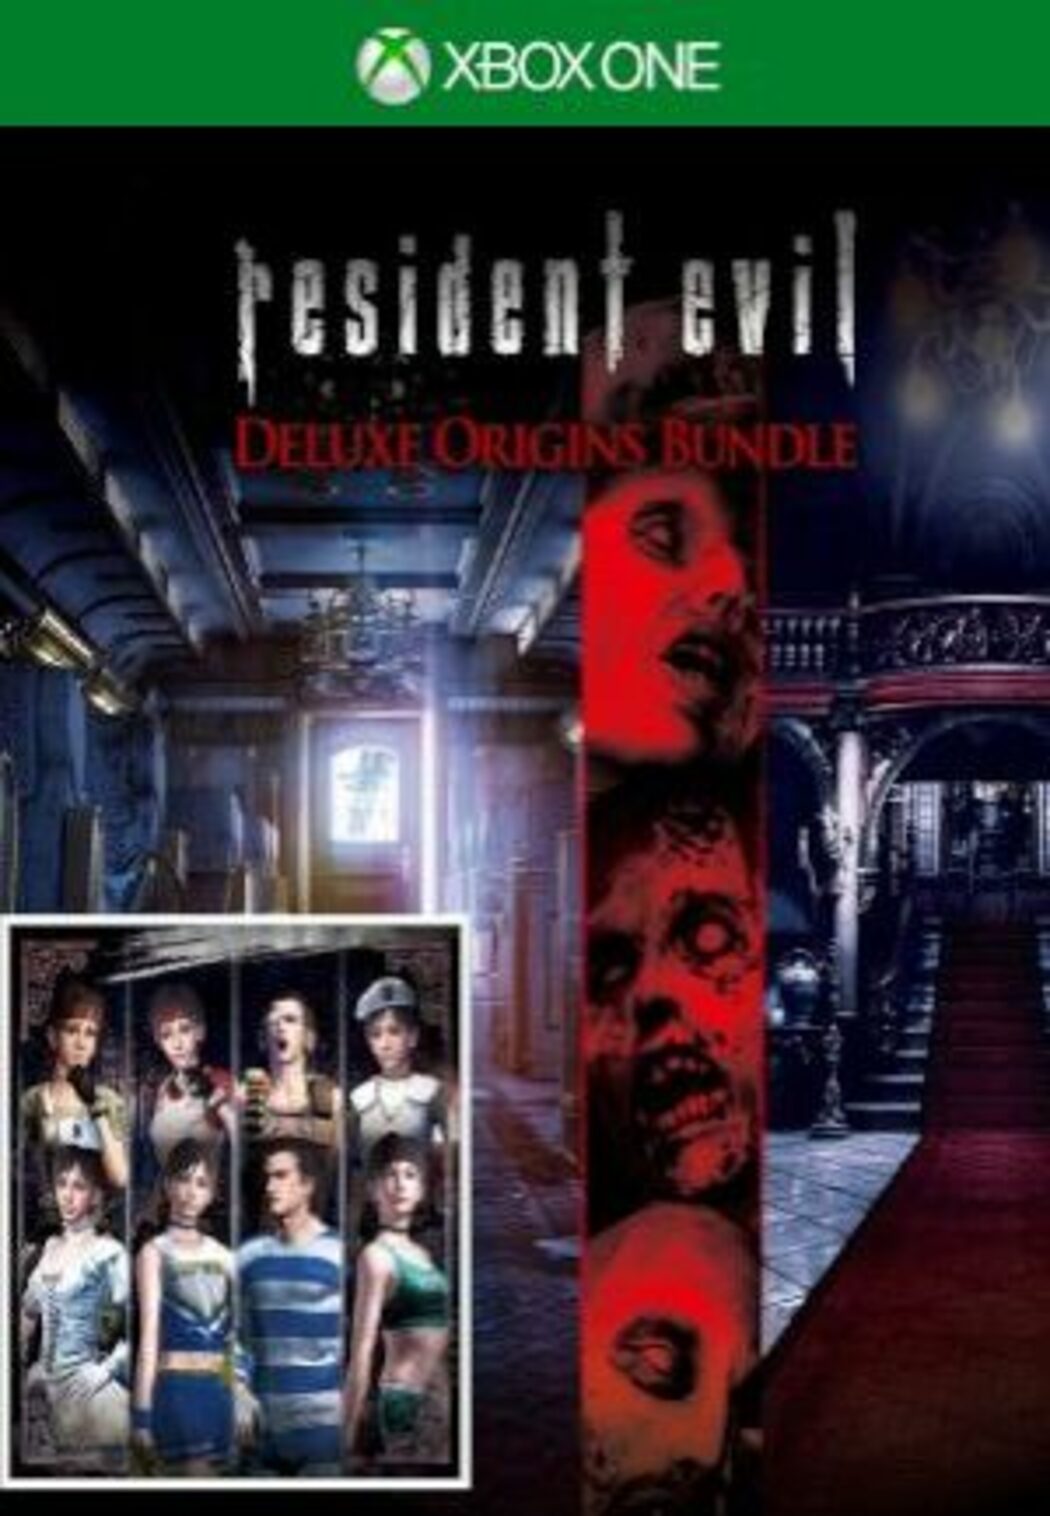 Resident Evil 4 (Xbox Series X|S) Xbox Live Key ARGENTINA